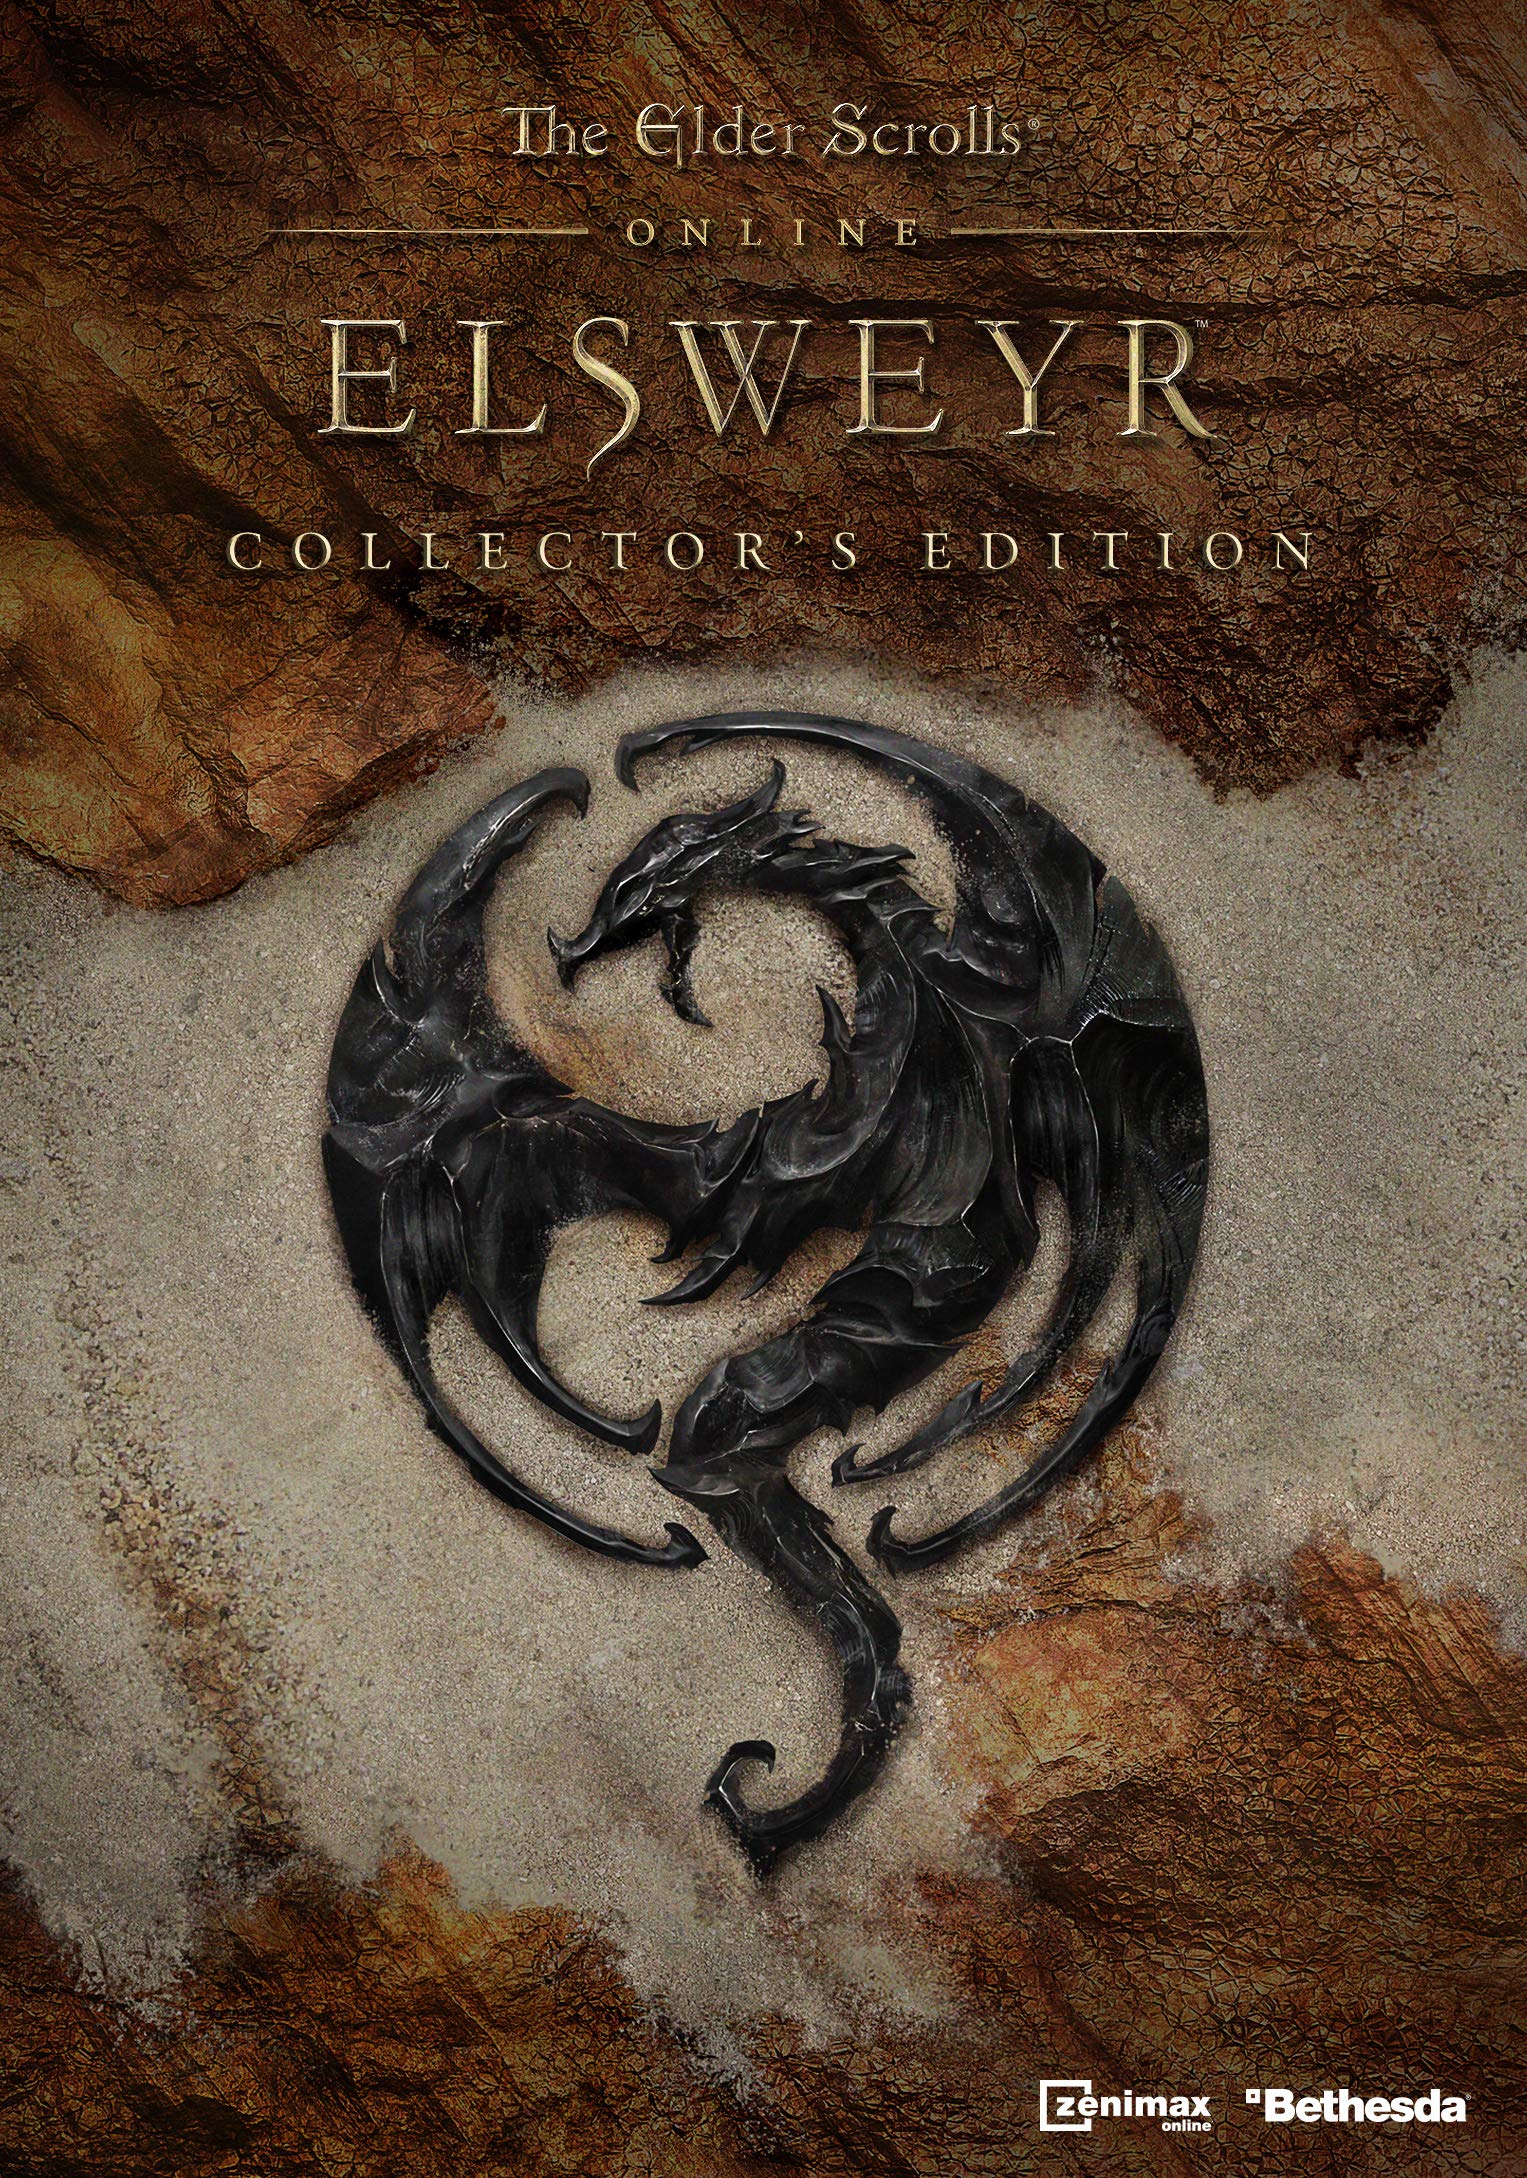 The Elder Scrolls Online: Elsweyr - Collector's Edition [Online Game Code]